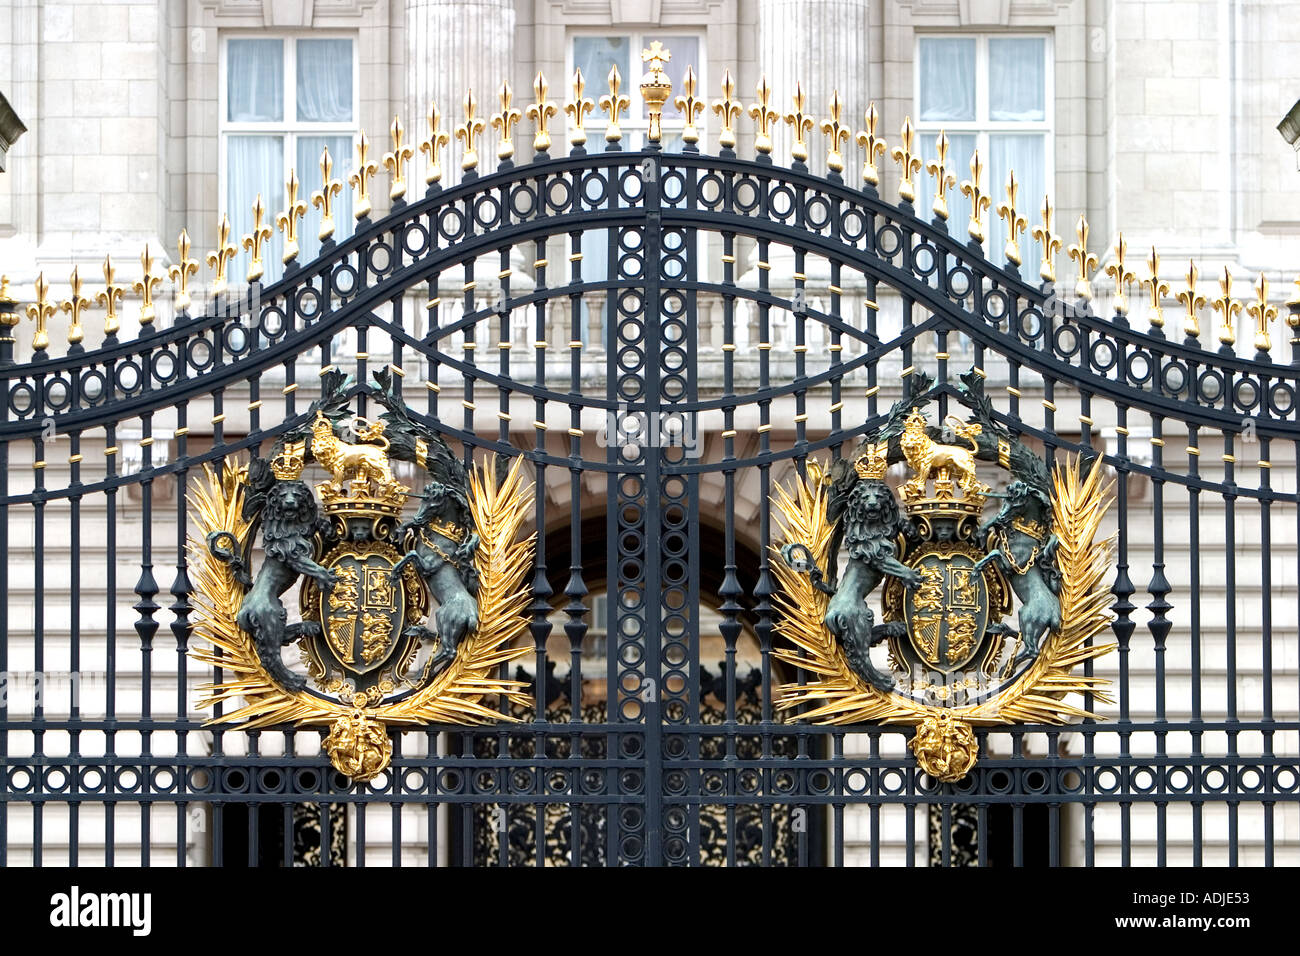 Coat of arms and main entrance gates at Buckingham Palace London England Stock Photo